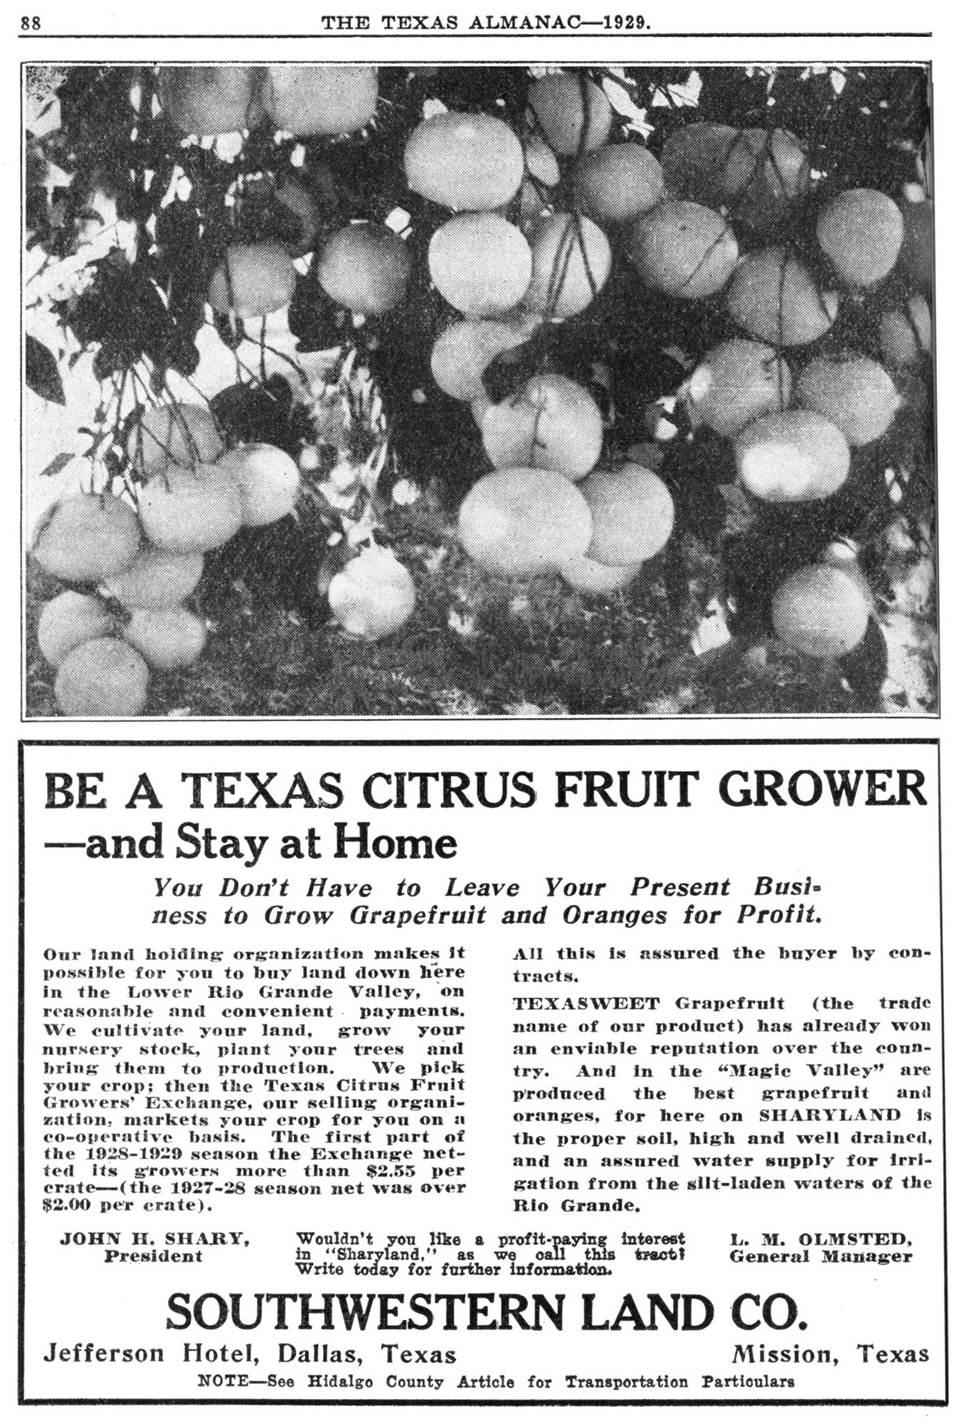 A citrus ad from the 1929 Texas Almanac. 